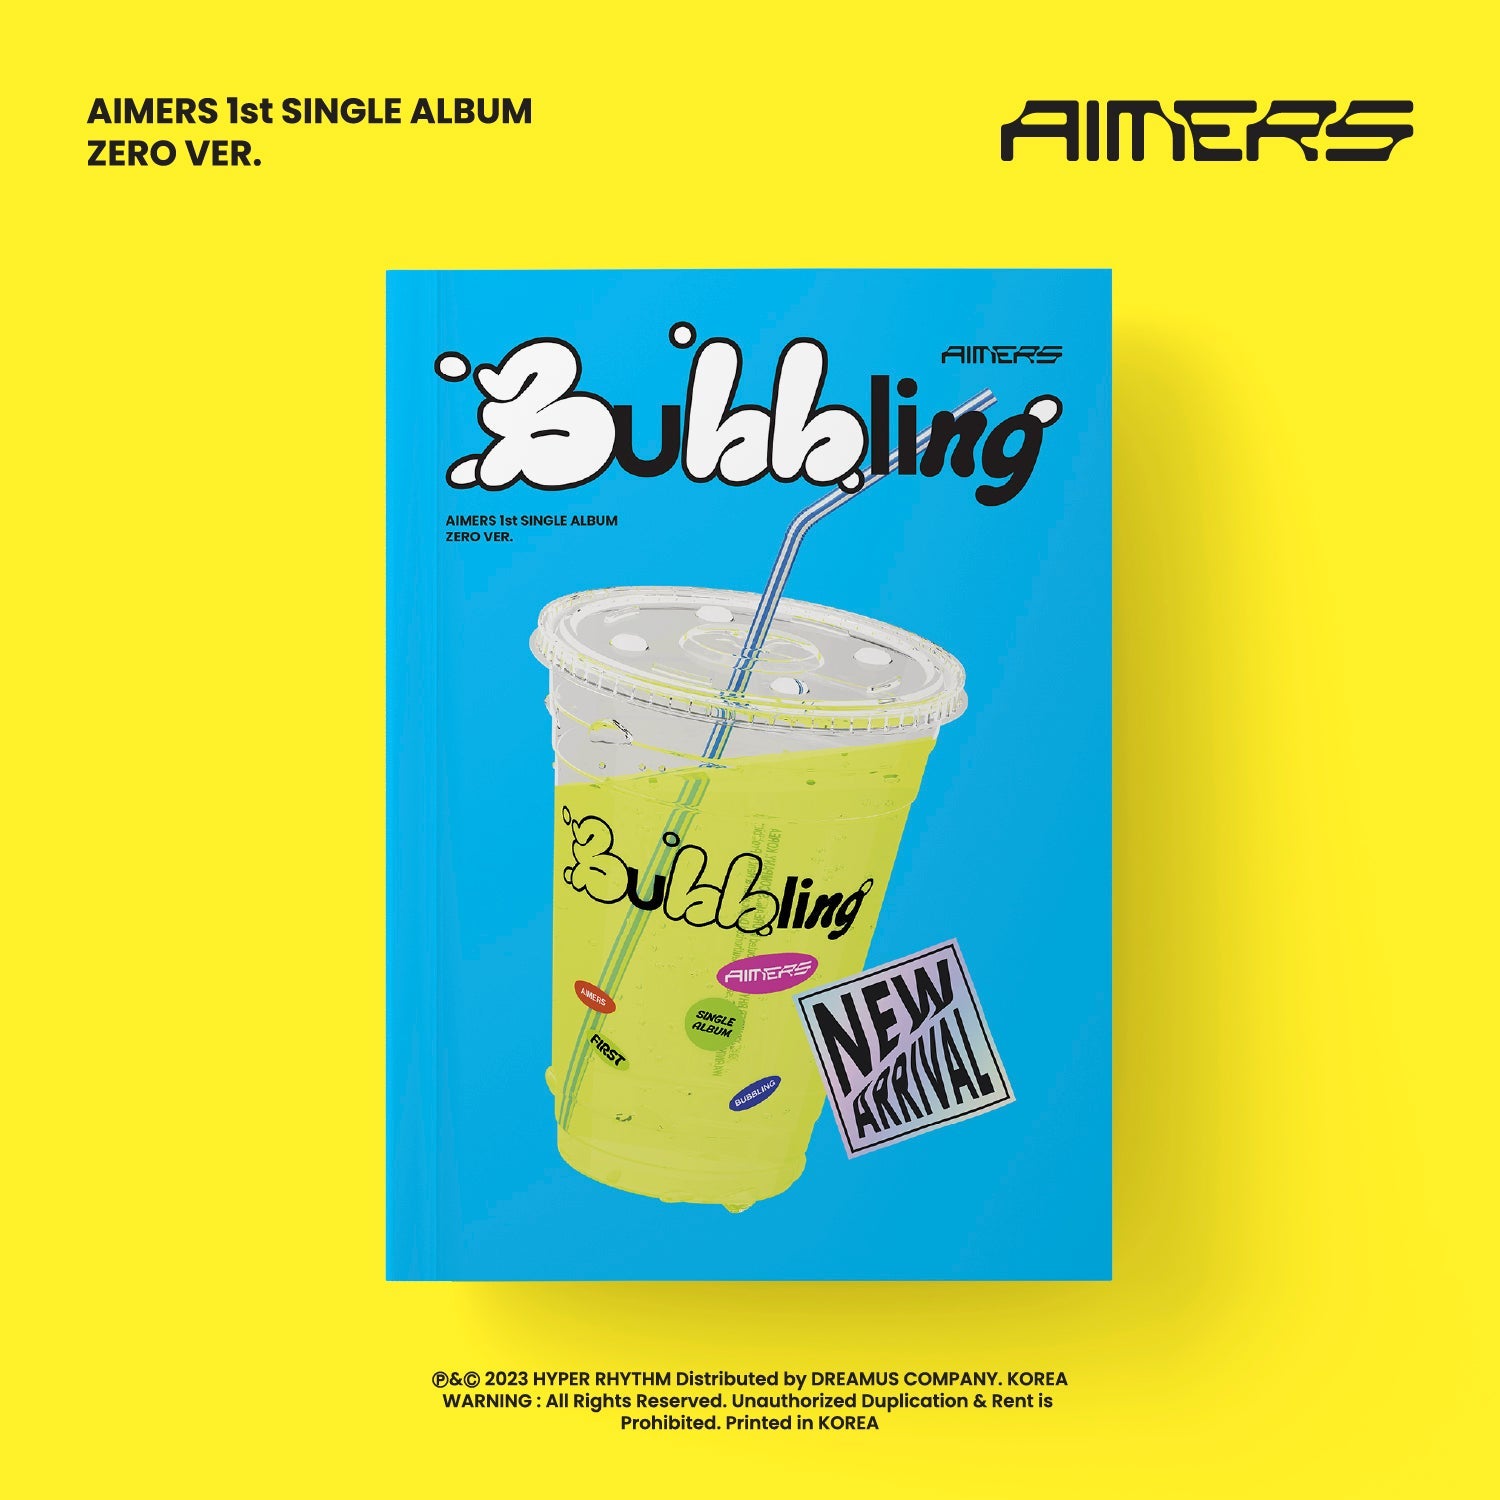 AIMERS 1ST SINGLE ALBUM 'BUBBLING' ZERO VERSION COVER